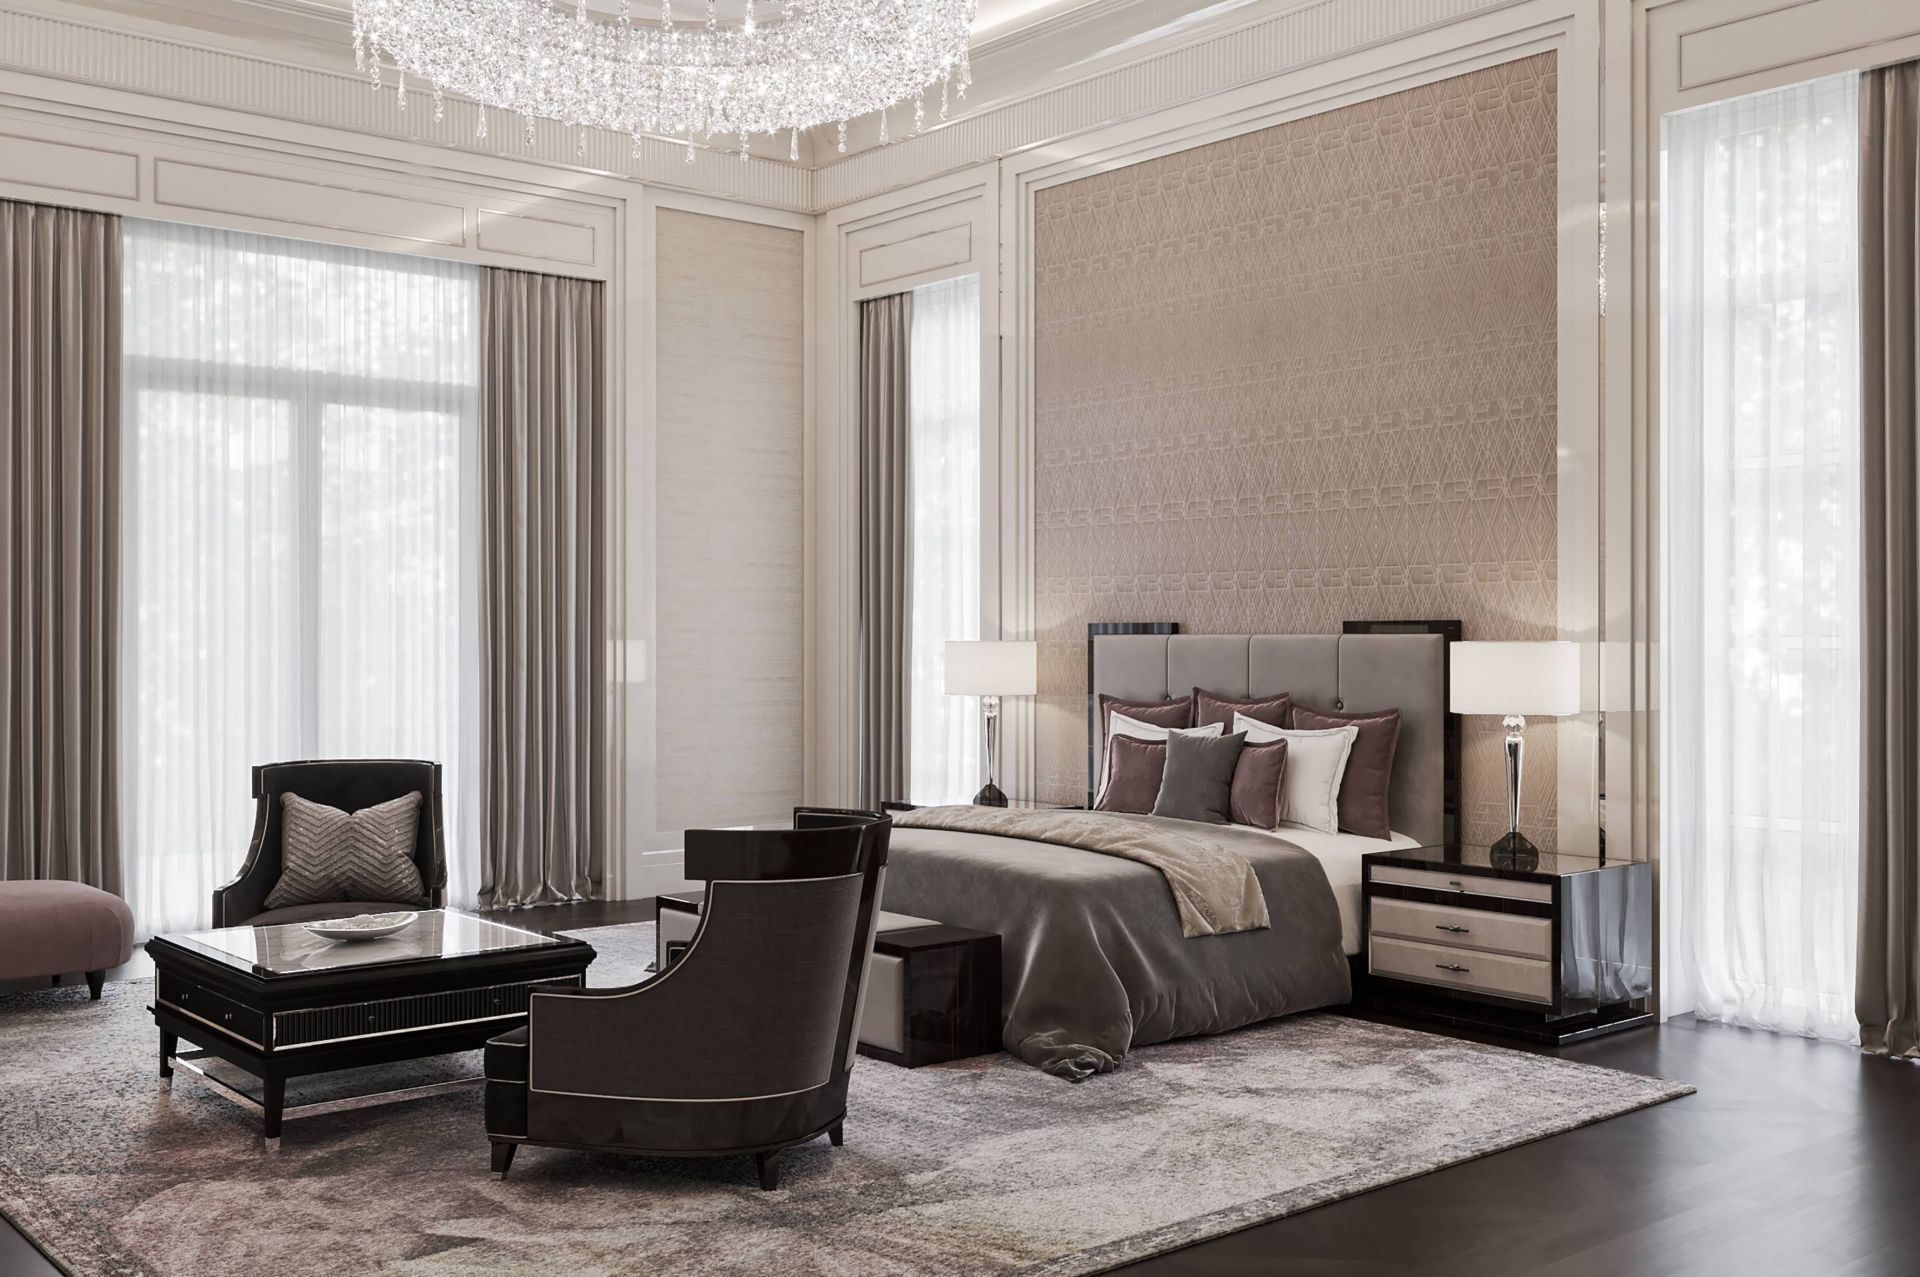 Design, American classic bedroom interior